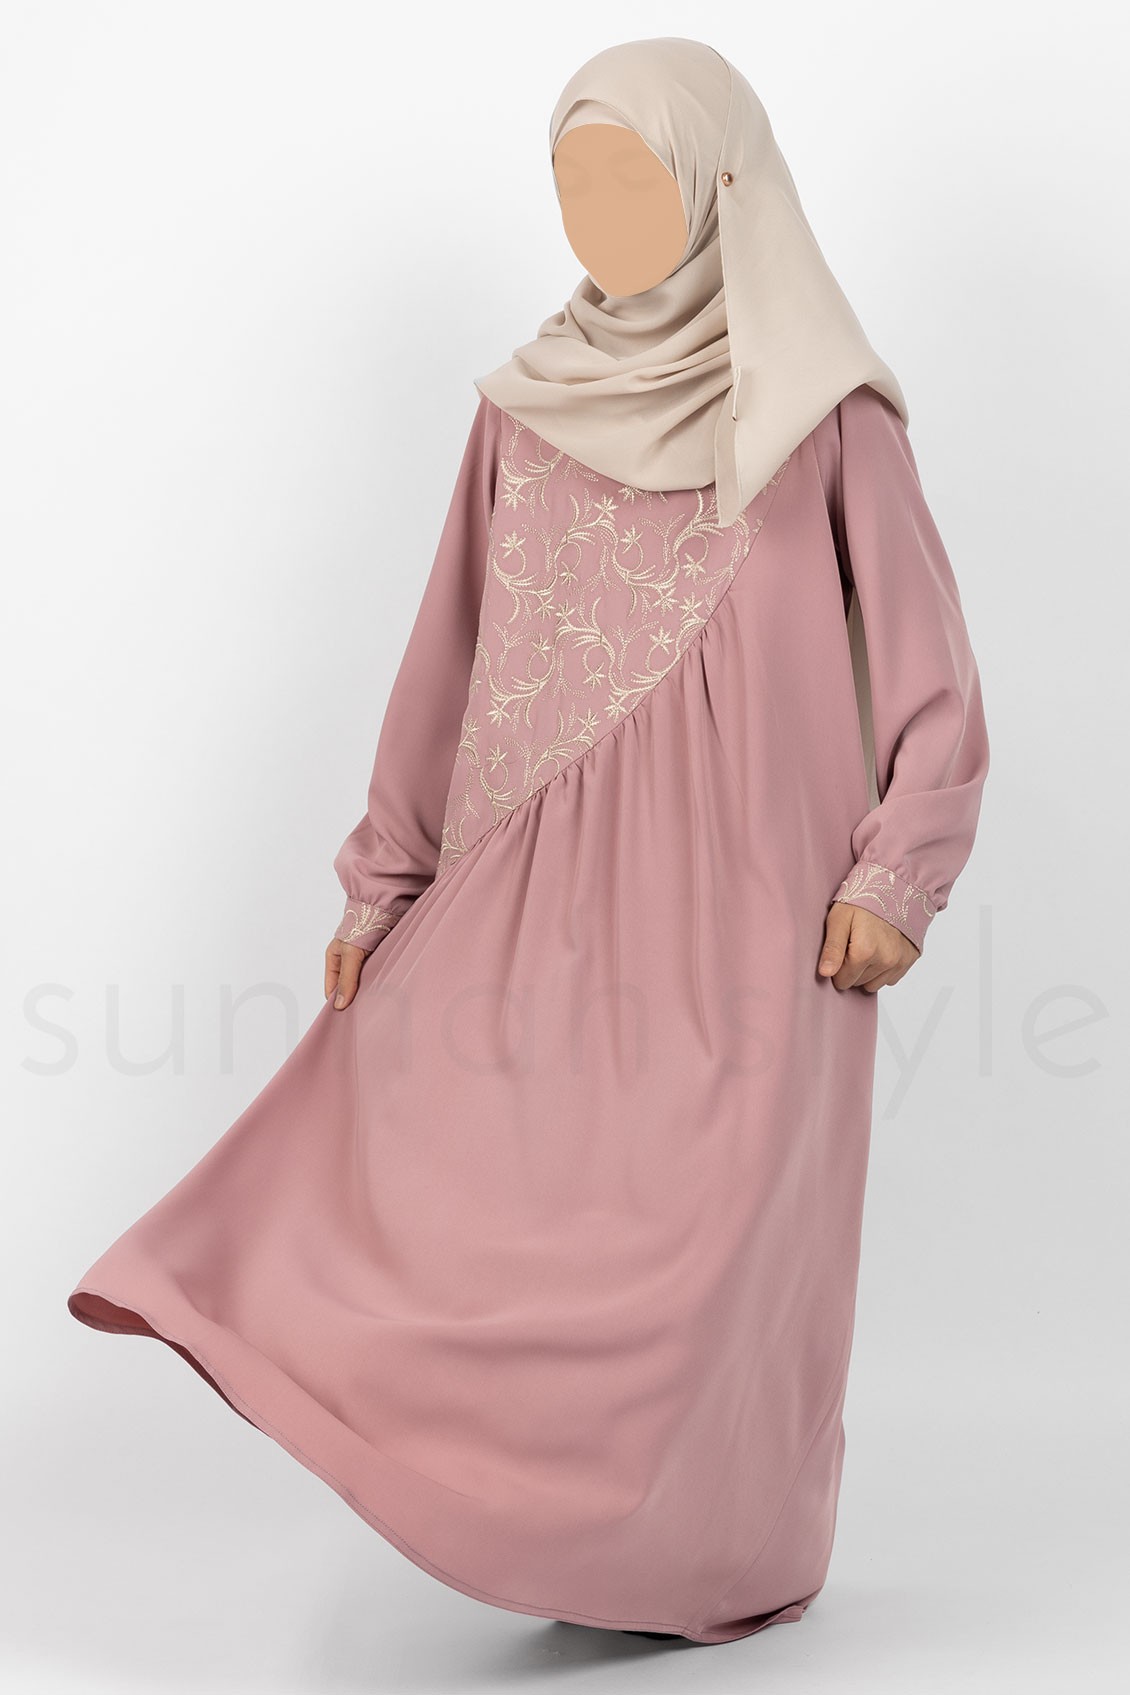 Sunnah Style Girls Floral Umbrella Abaya Dusty Rose